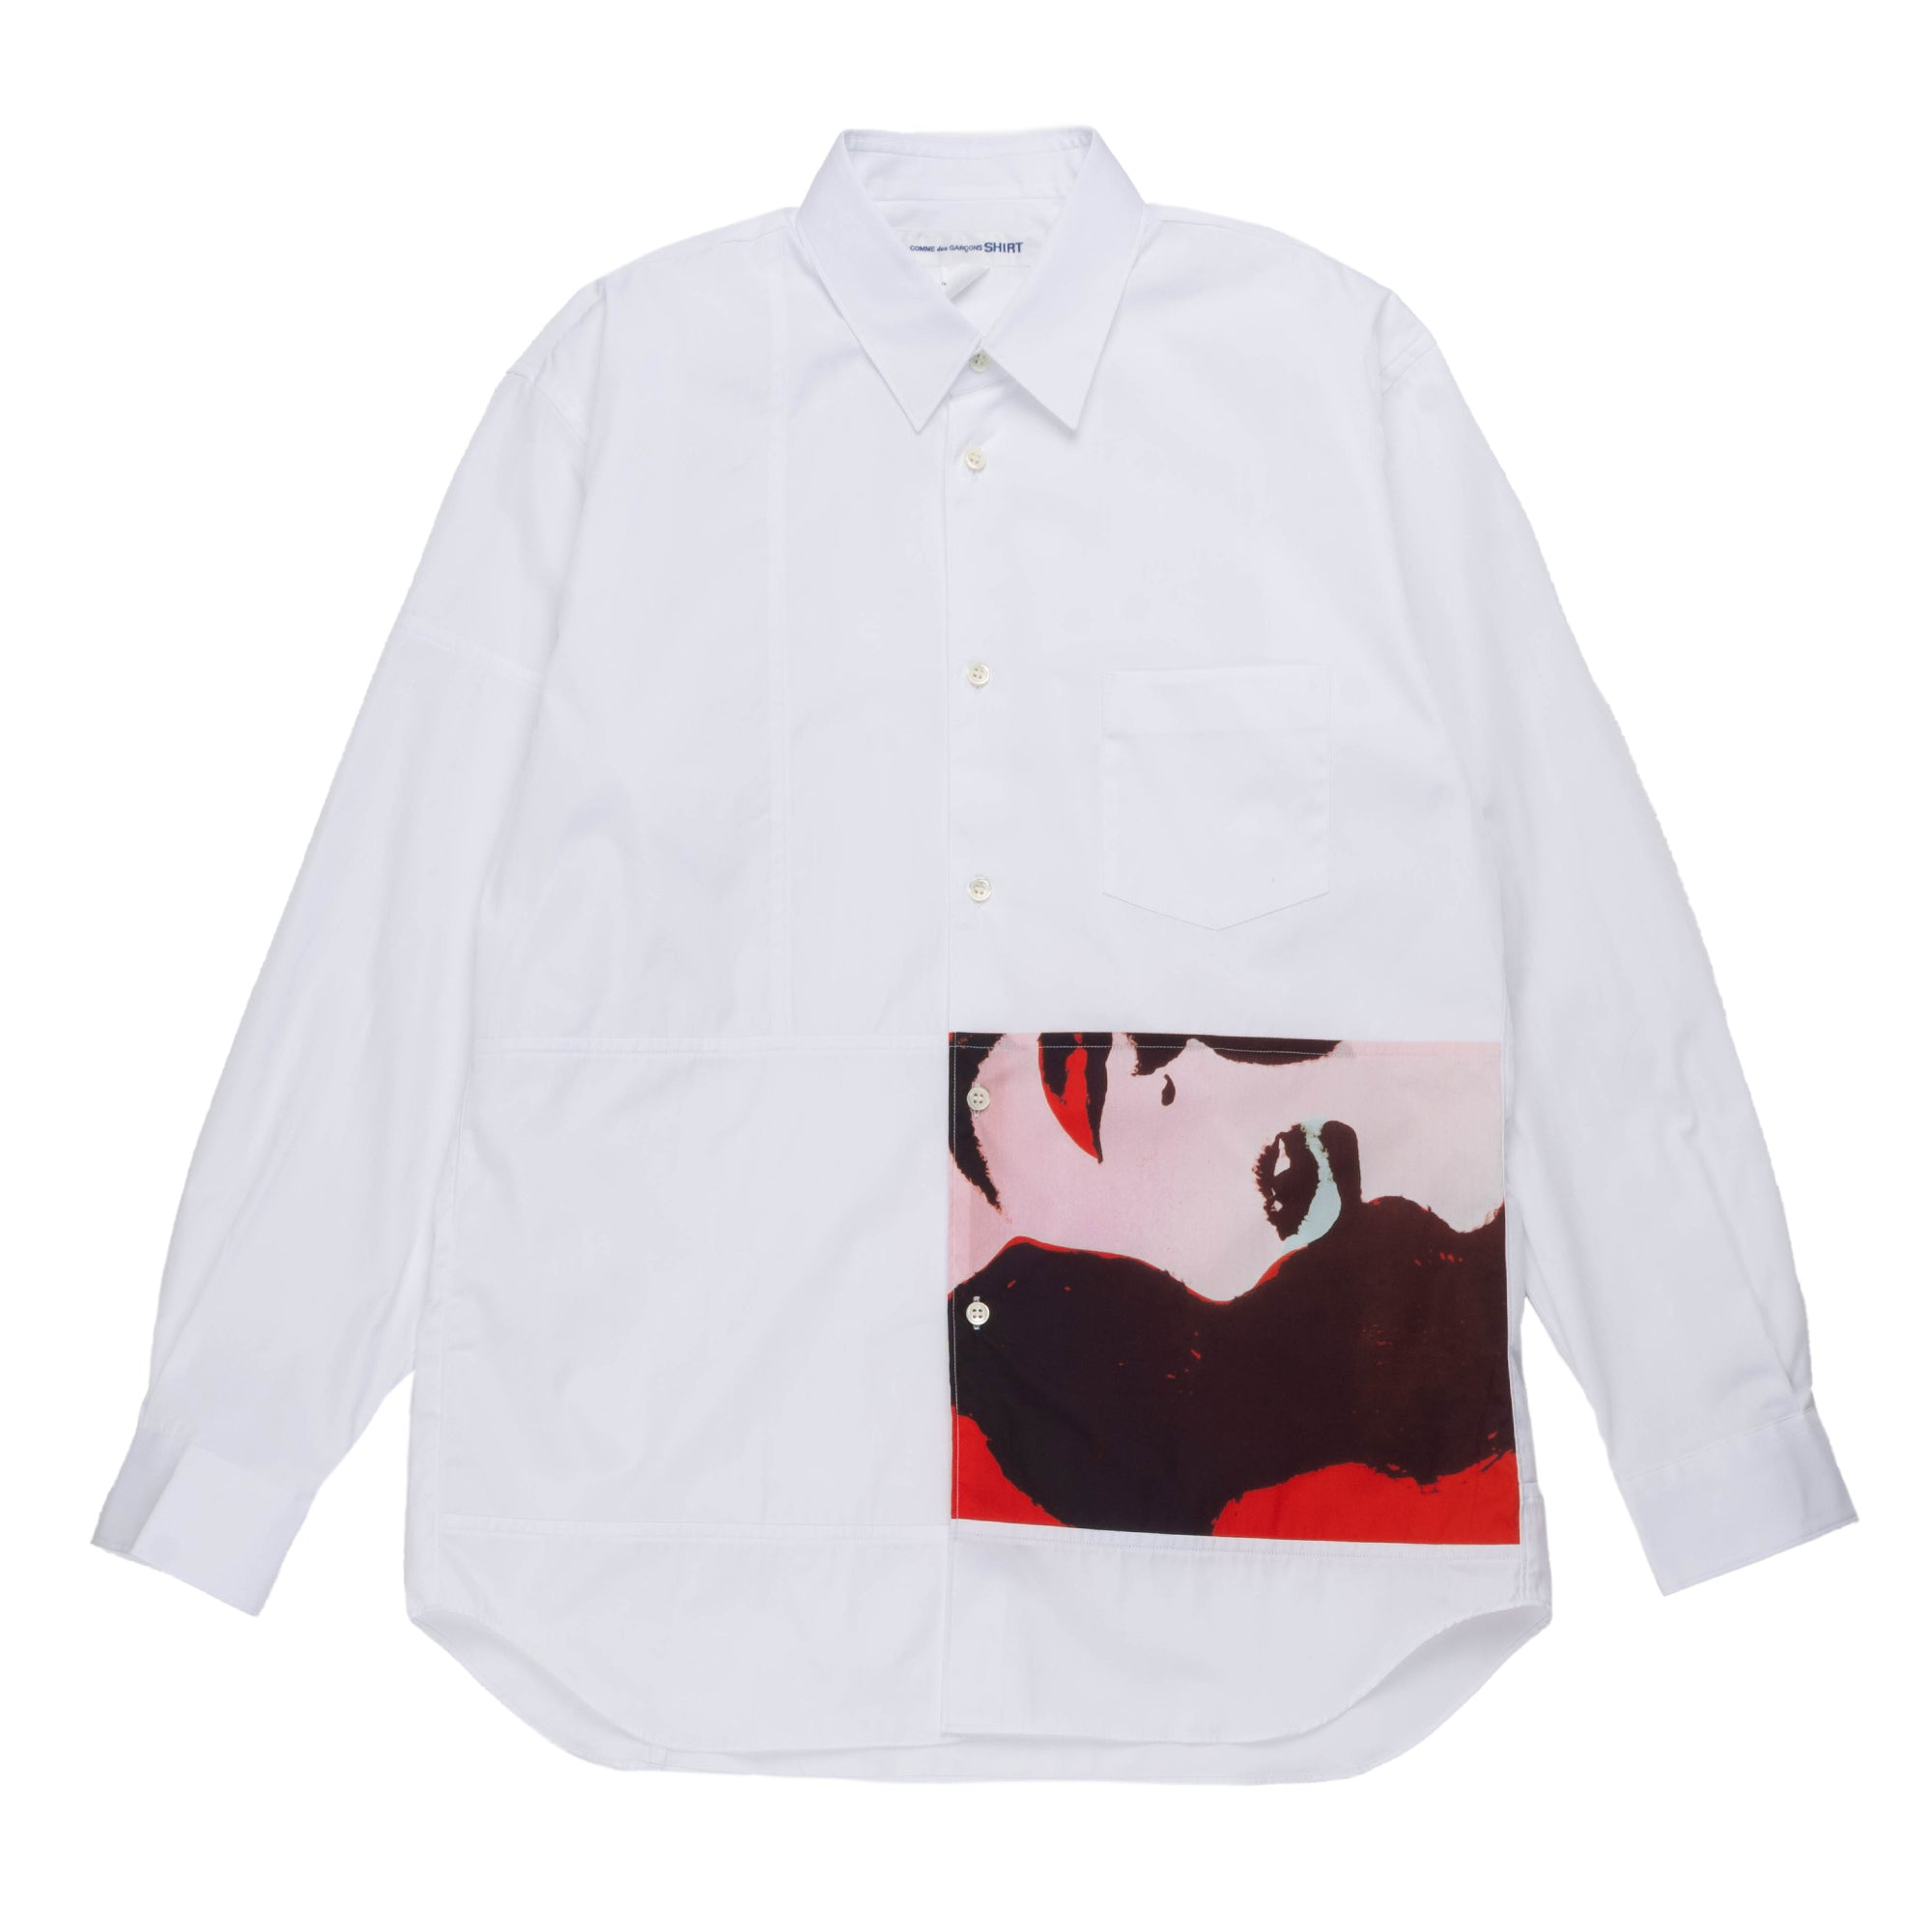 CDG SHIRT Andy Warhol Cotton Shirt White FM-B018-S24